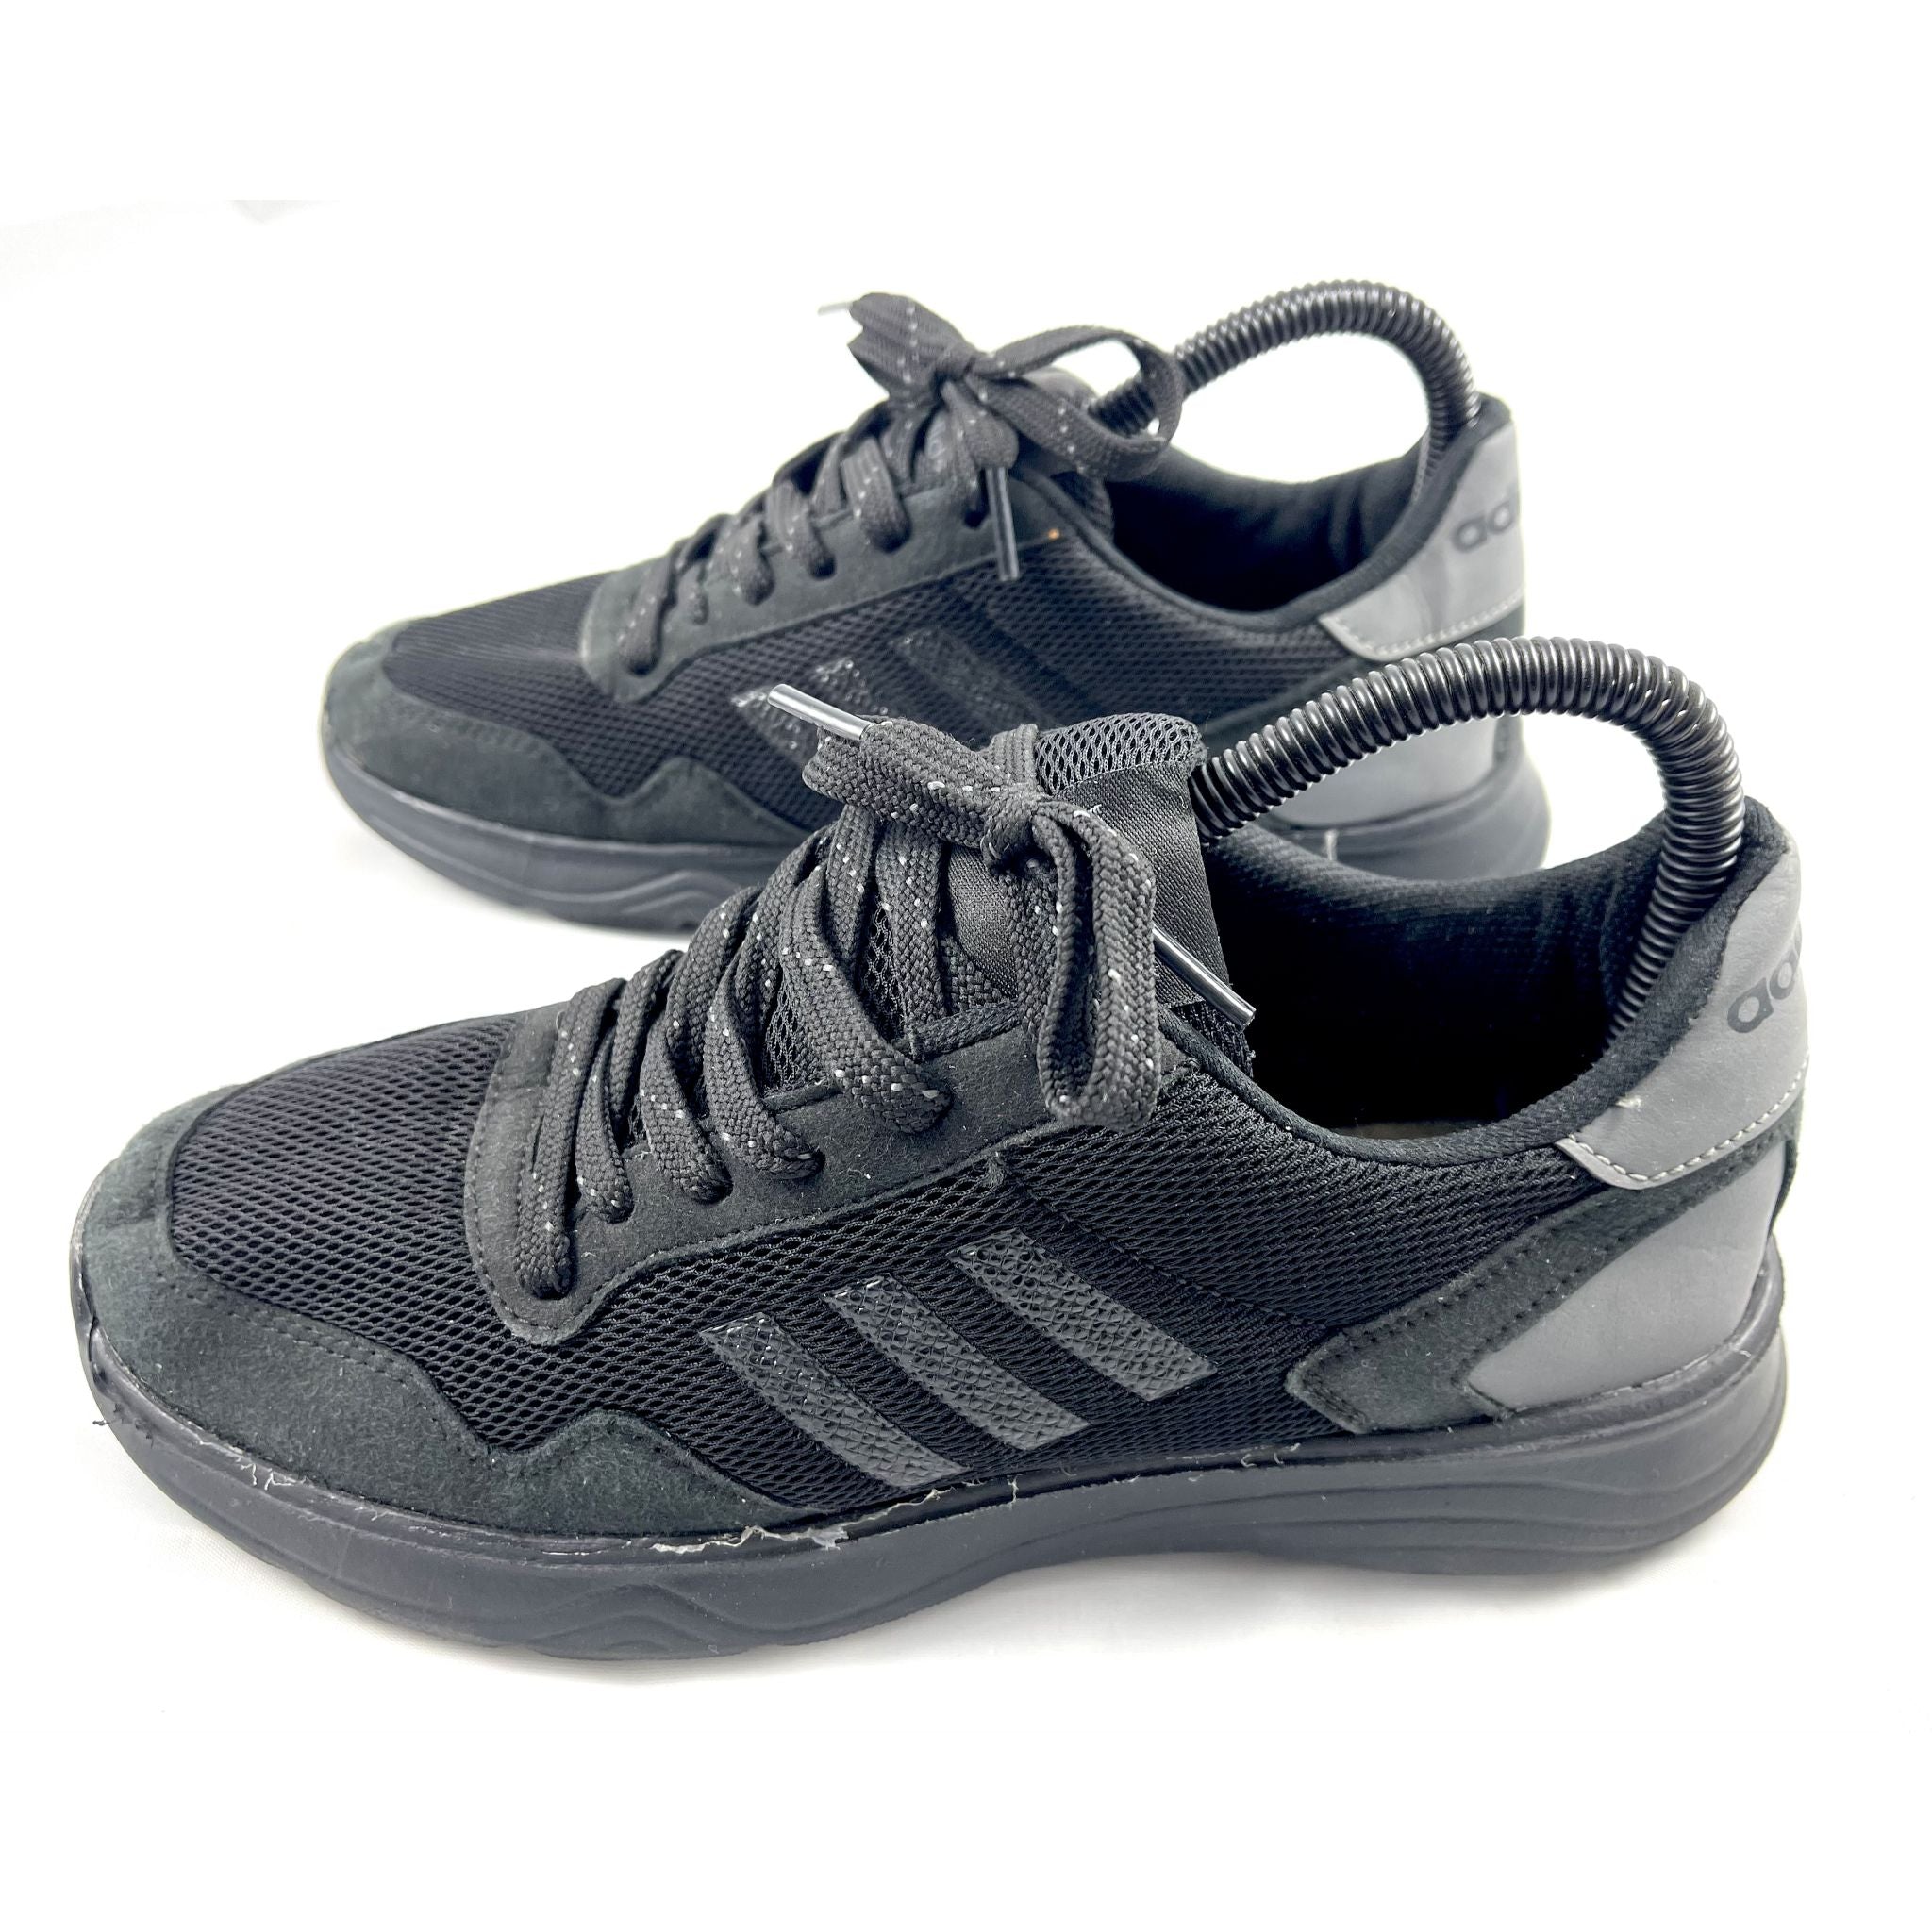 Black Adidas Joggers